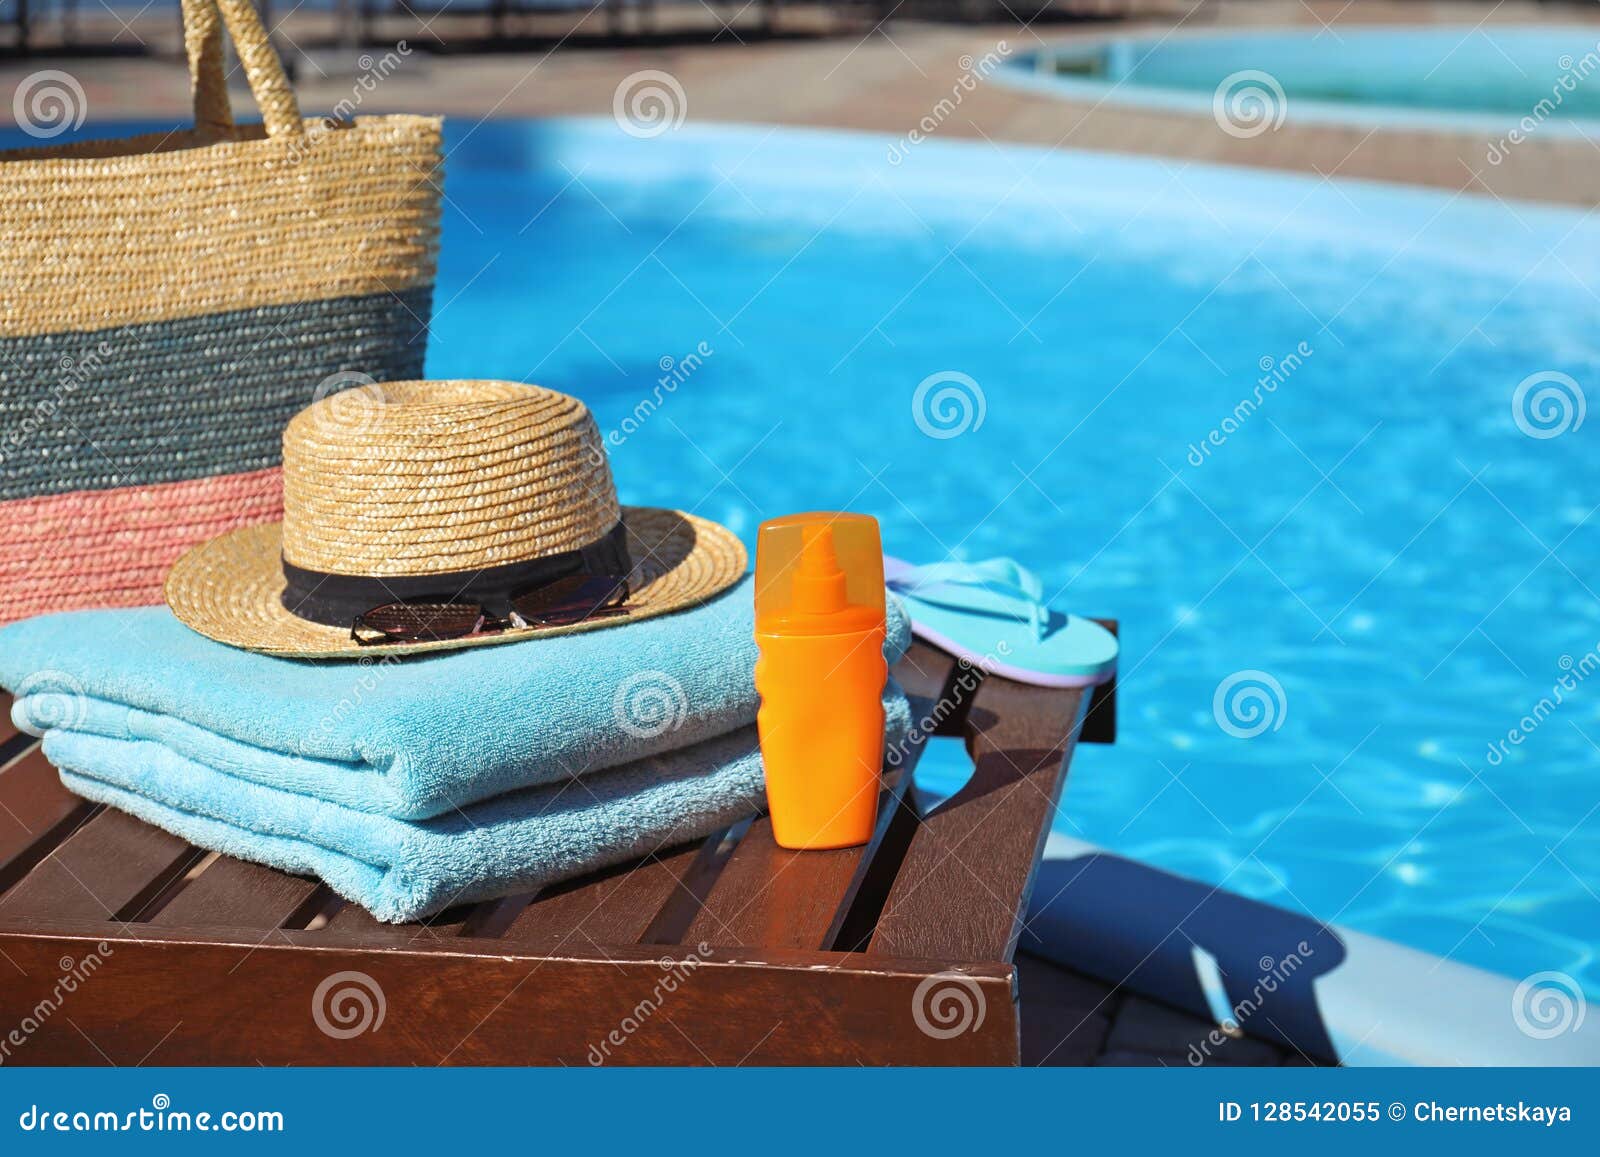 Beach Accessories Near Swimming Pool Stock Image - Image ...